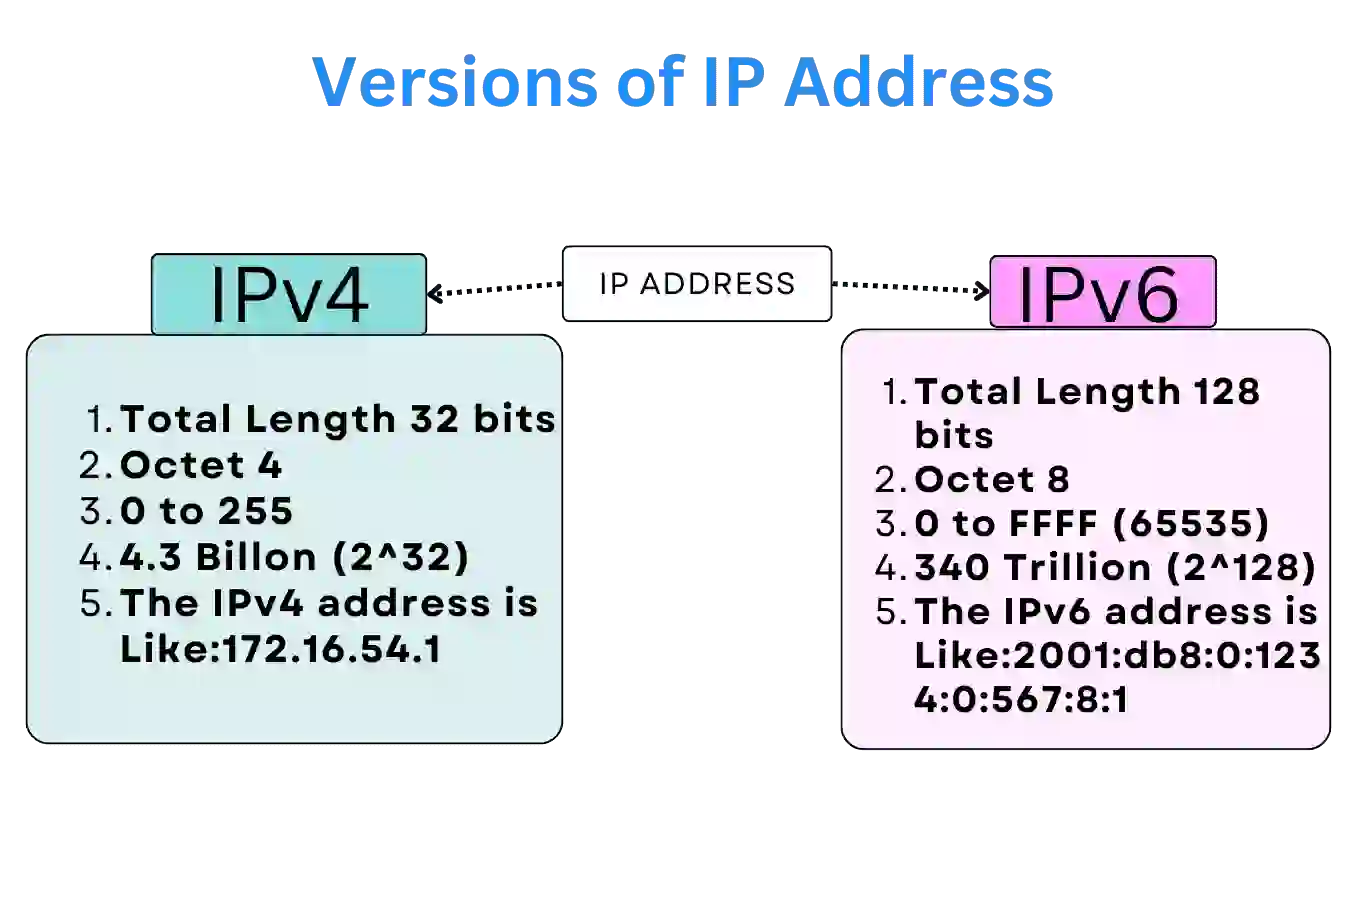 Versions of IP Address